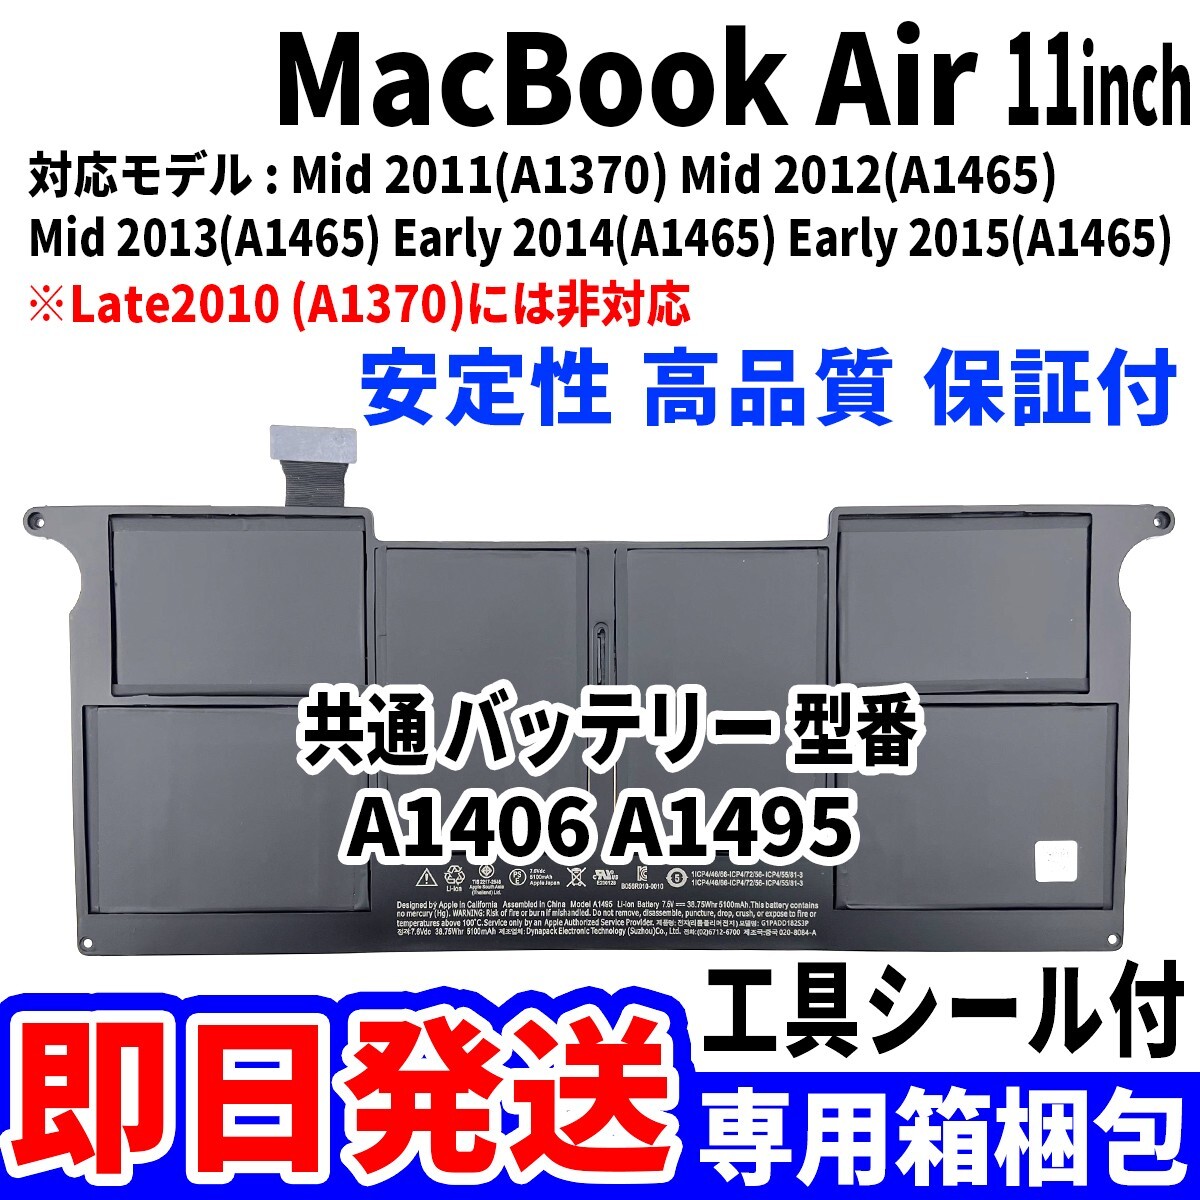 新品 MacBook Air 11inch A1370 A1465 バッテリー A1406 A1495 2011 2012 2013 2014 2015 battery repair 本体用 交換 修理 工具付_画像1